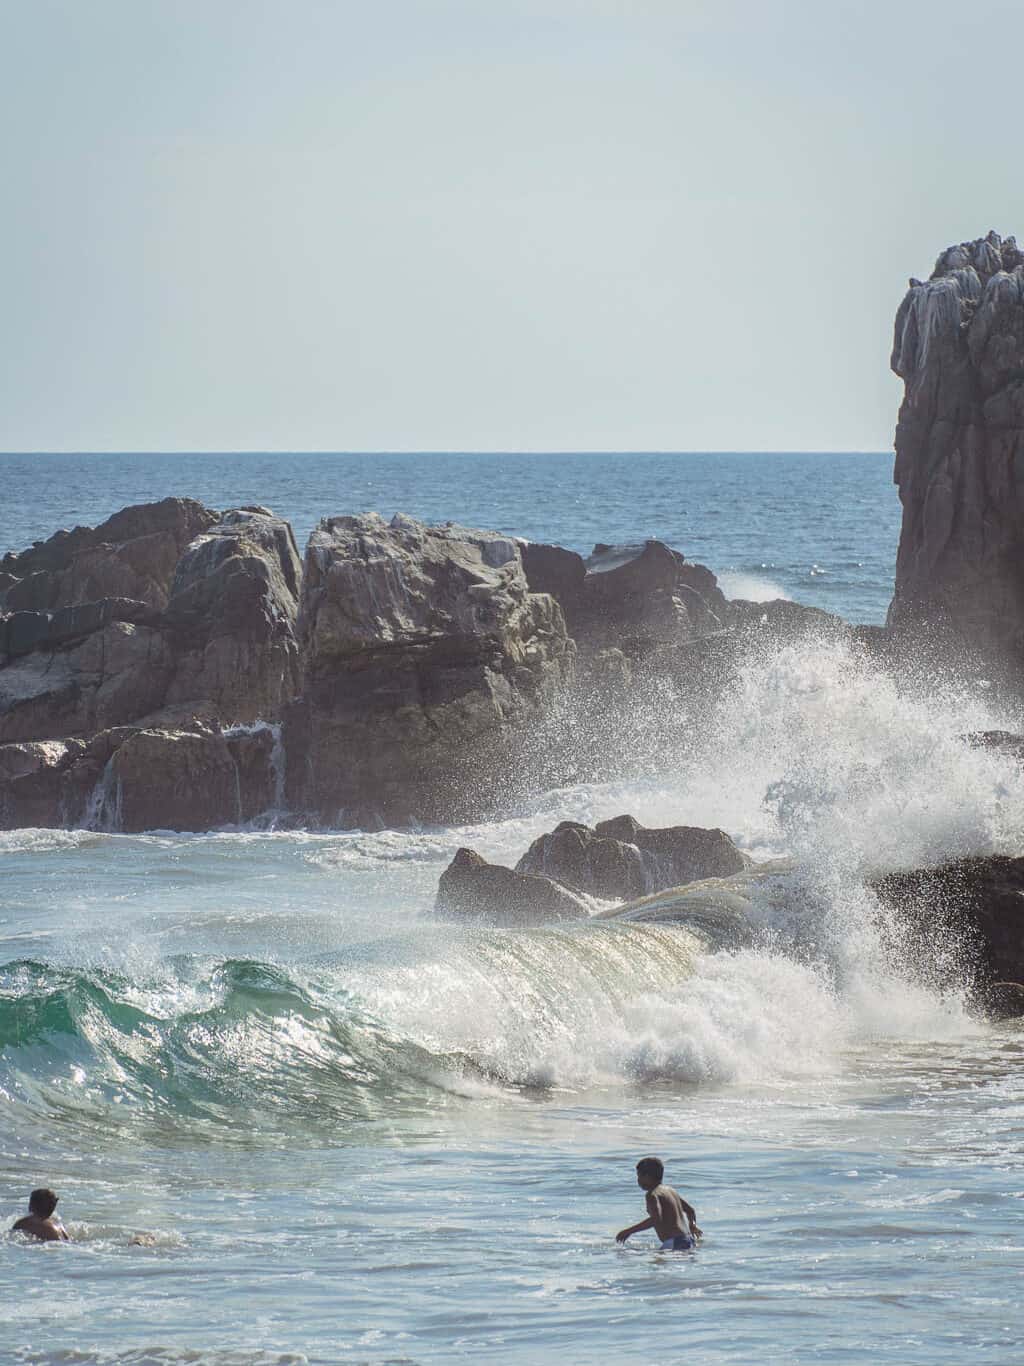 Giant Waves at a Chacahua beach mirador